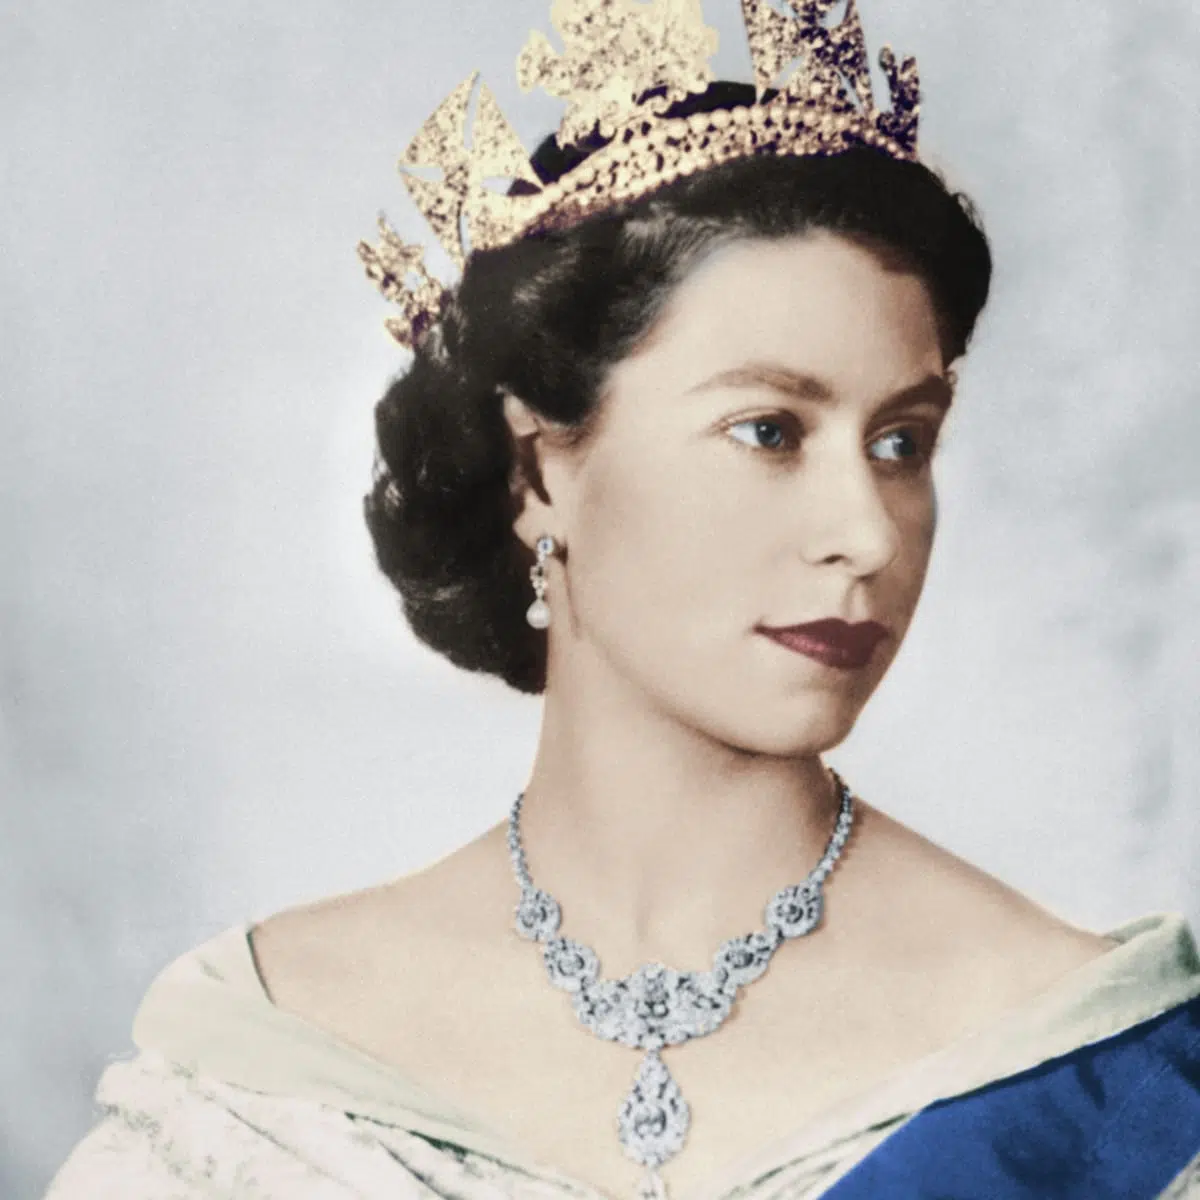 Queen Elizabeth celebrates her 96th birthday today